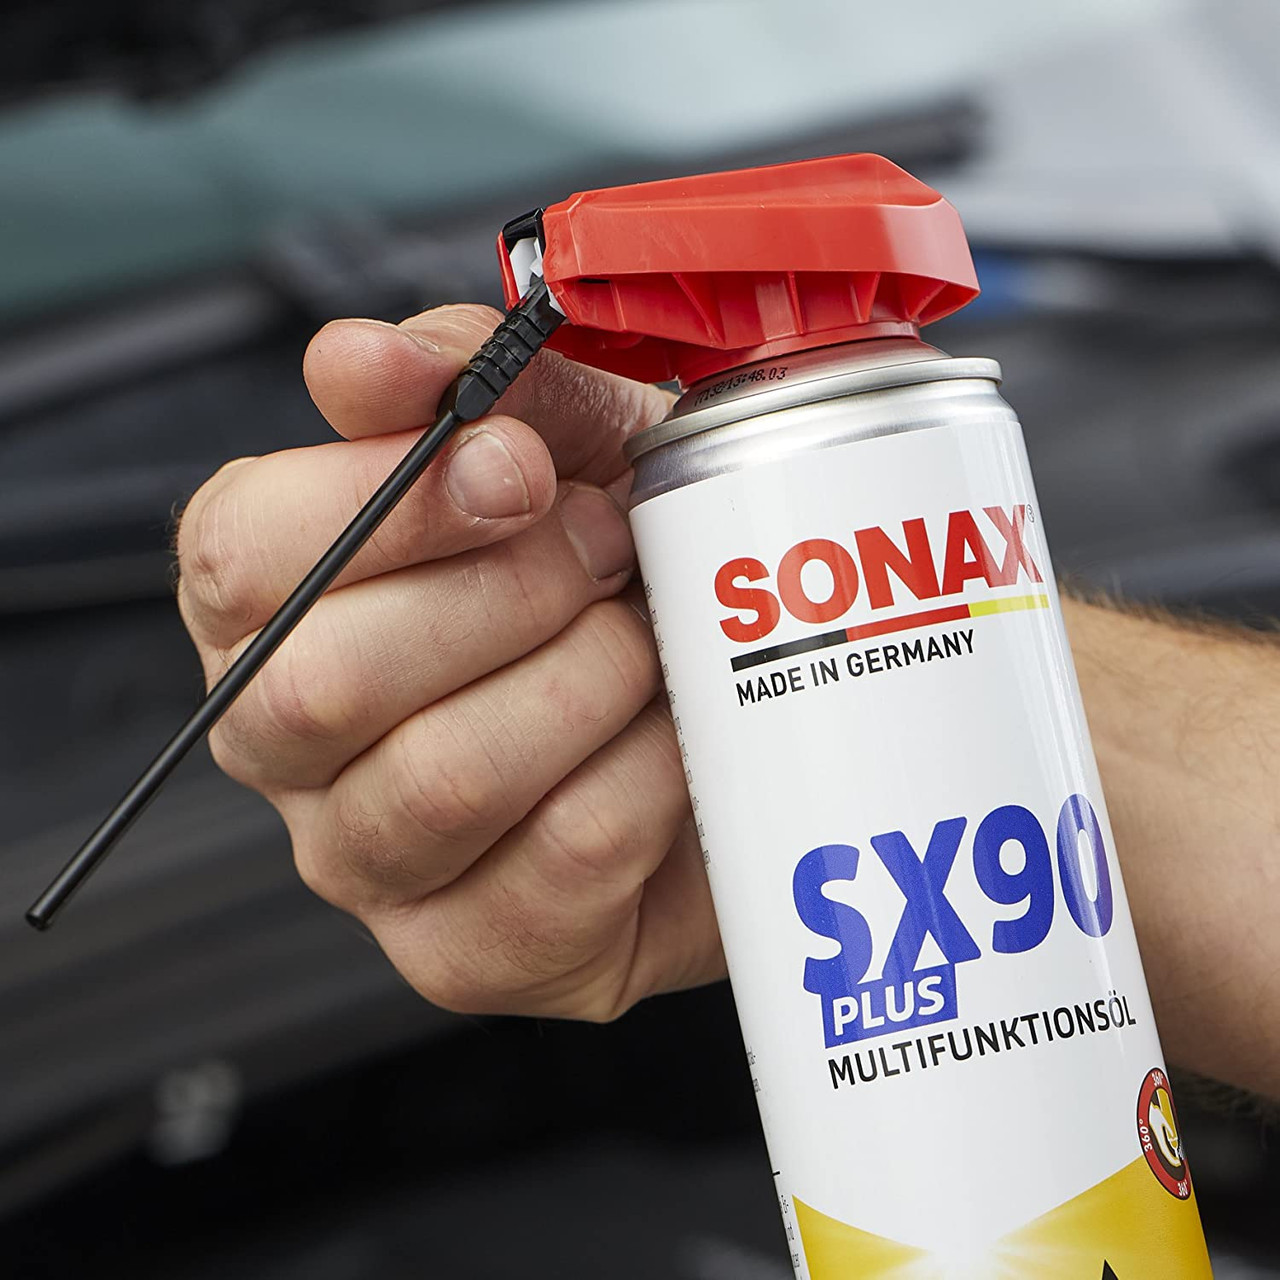 SONAX SX90 Plus (400 ml)